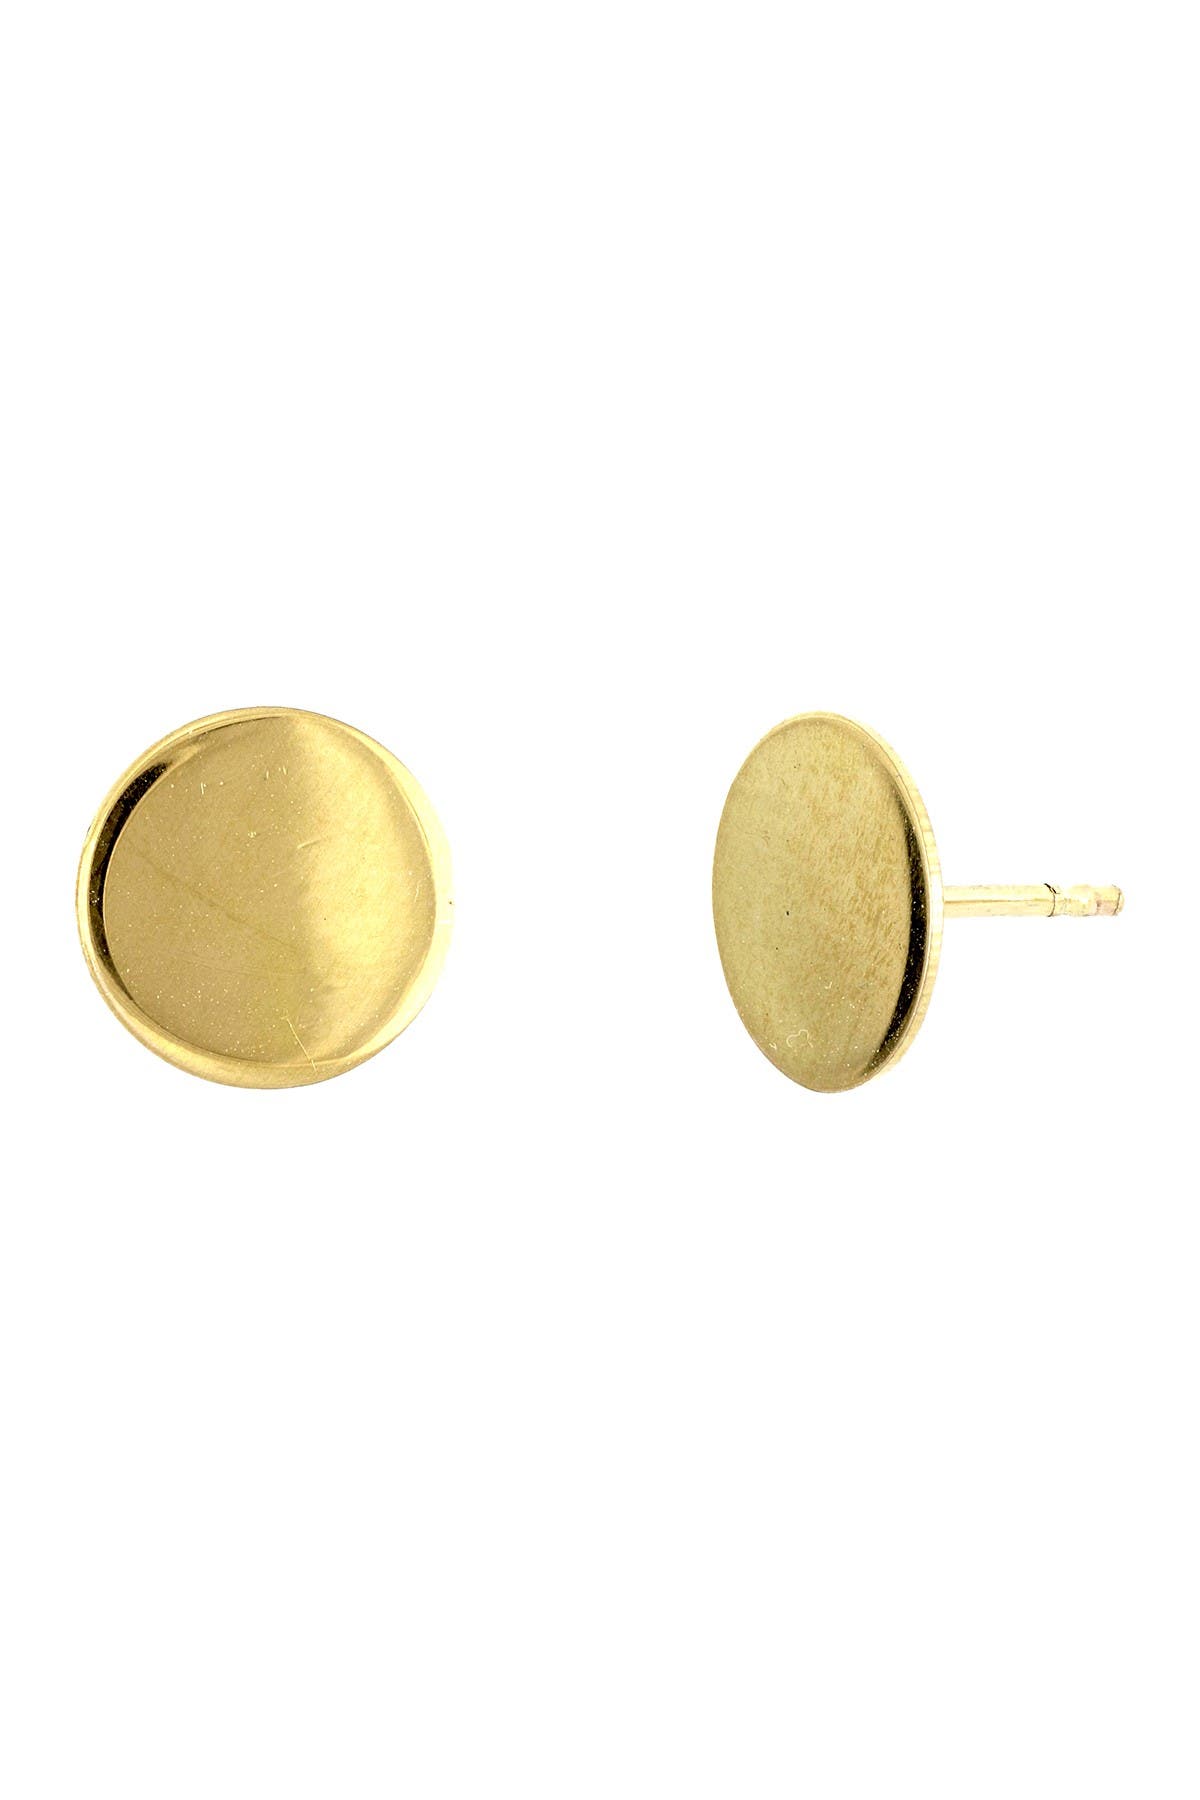 Bony Levy 14k Yellow Gold Circle Stud Earrings